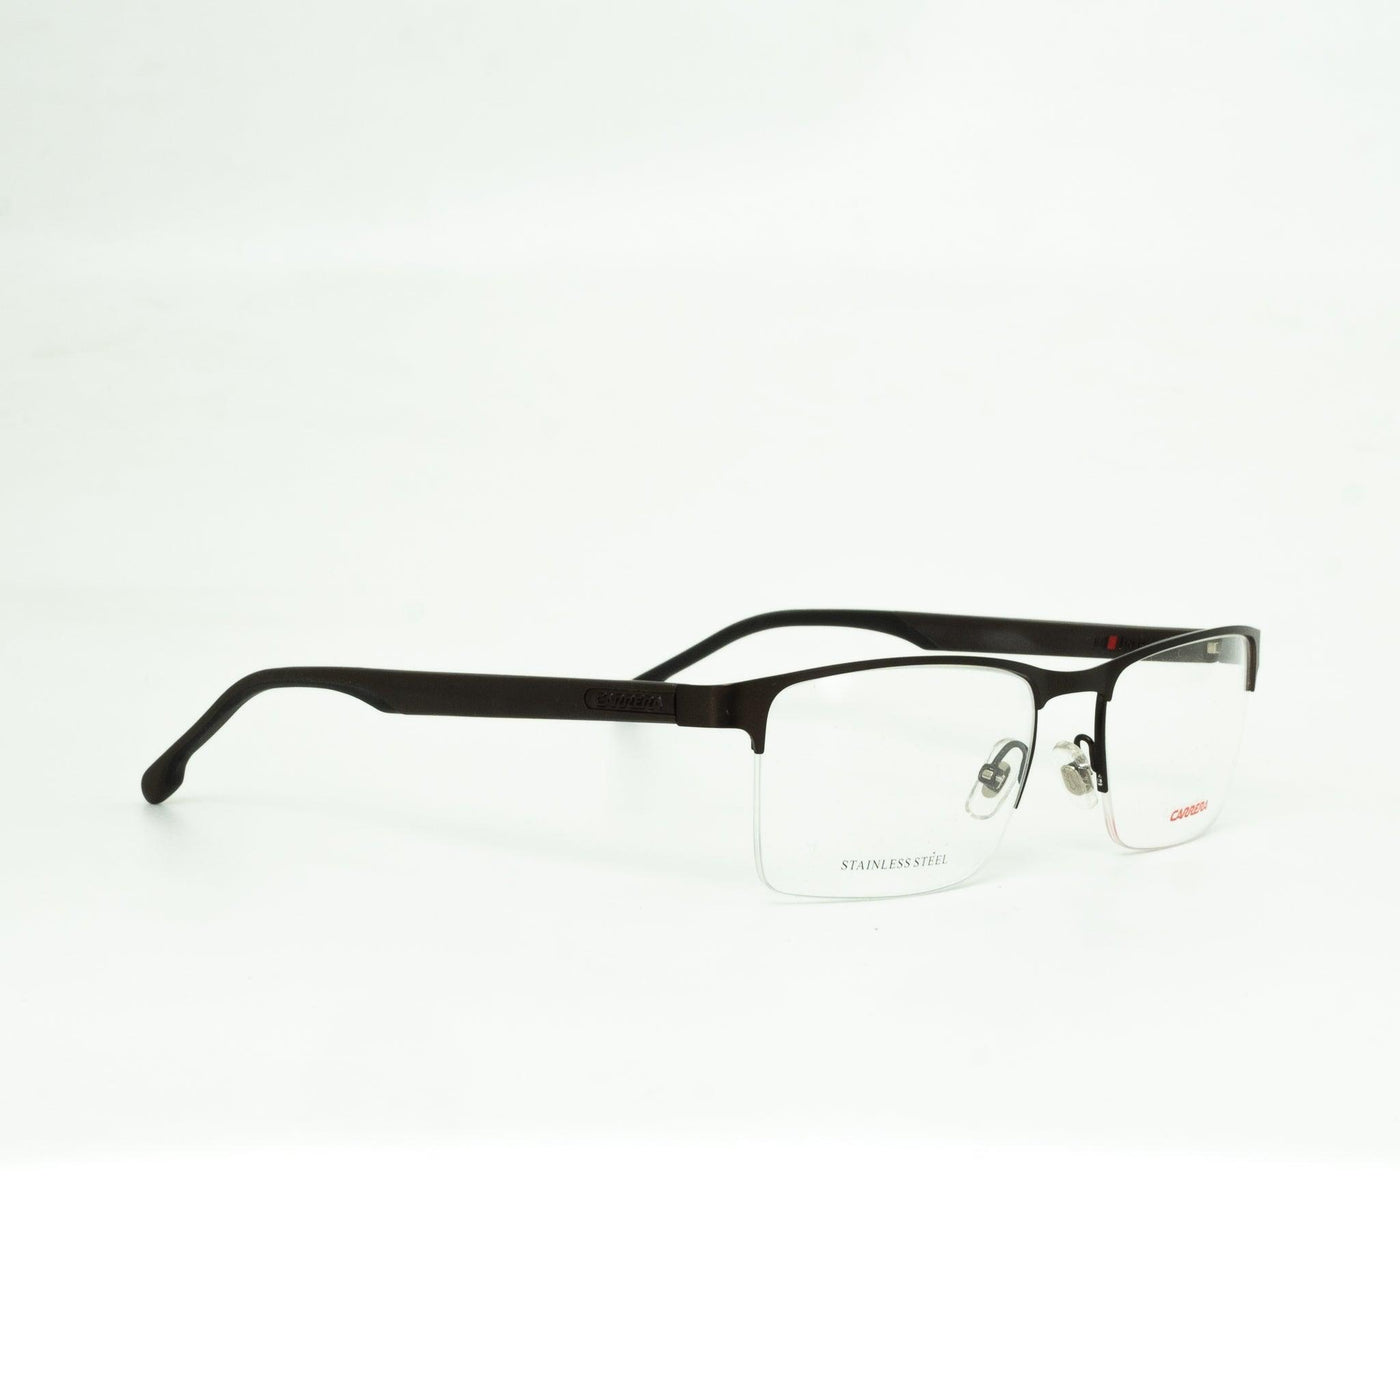 Carrera CA886409Q55 | Eyeglasses - Vision Express Optical Philippines